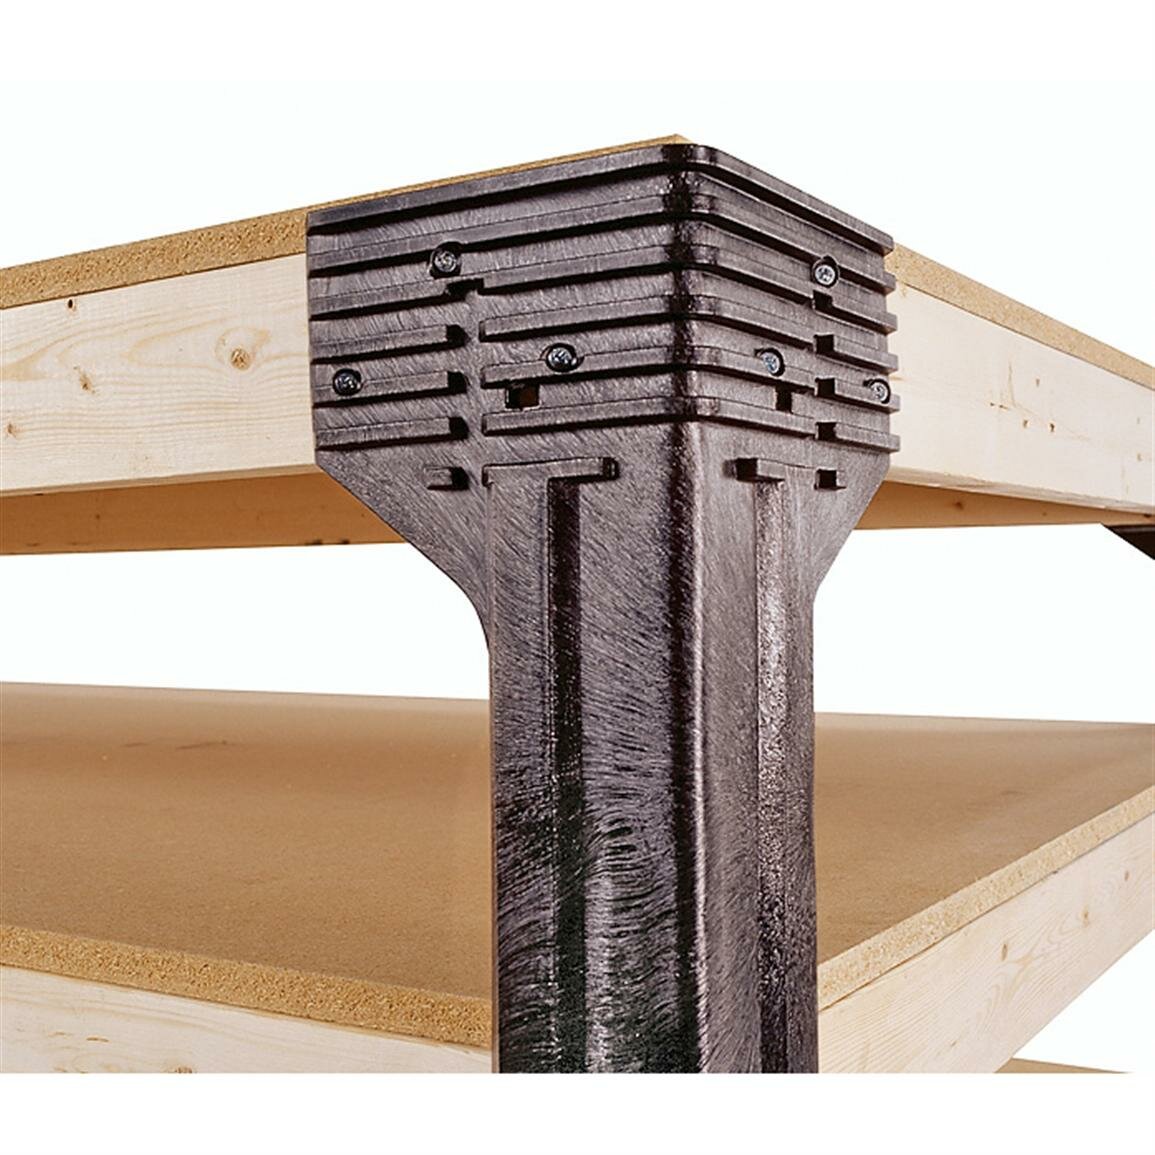 Work Bench Legs for Best Your Workspace Furniture Design: Metal Workbench Legs Kit | Workbench Table Legs | Work Bench Legs